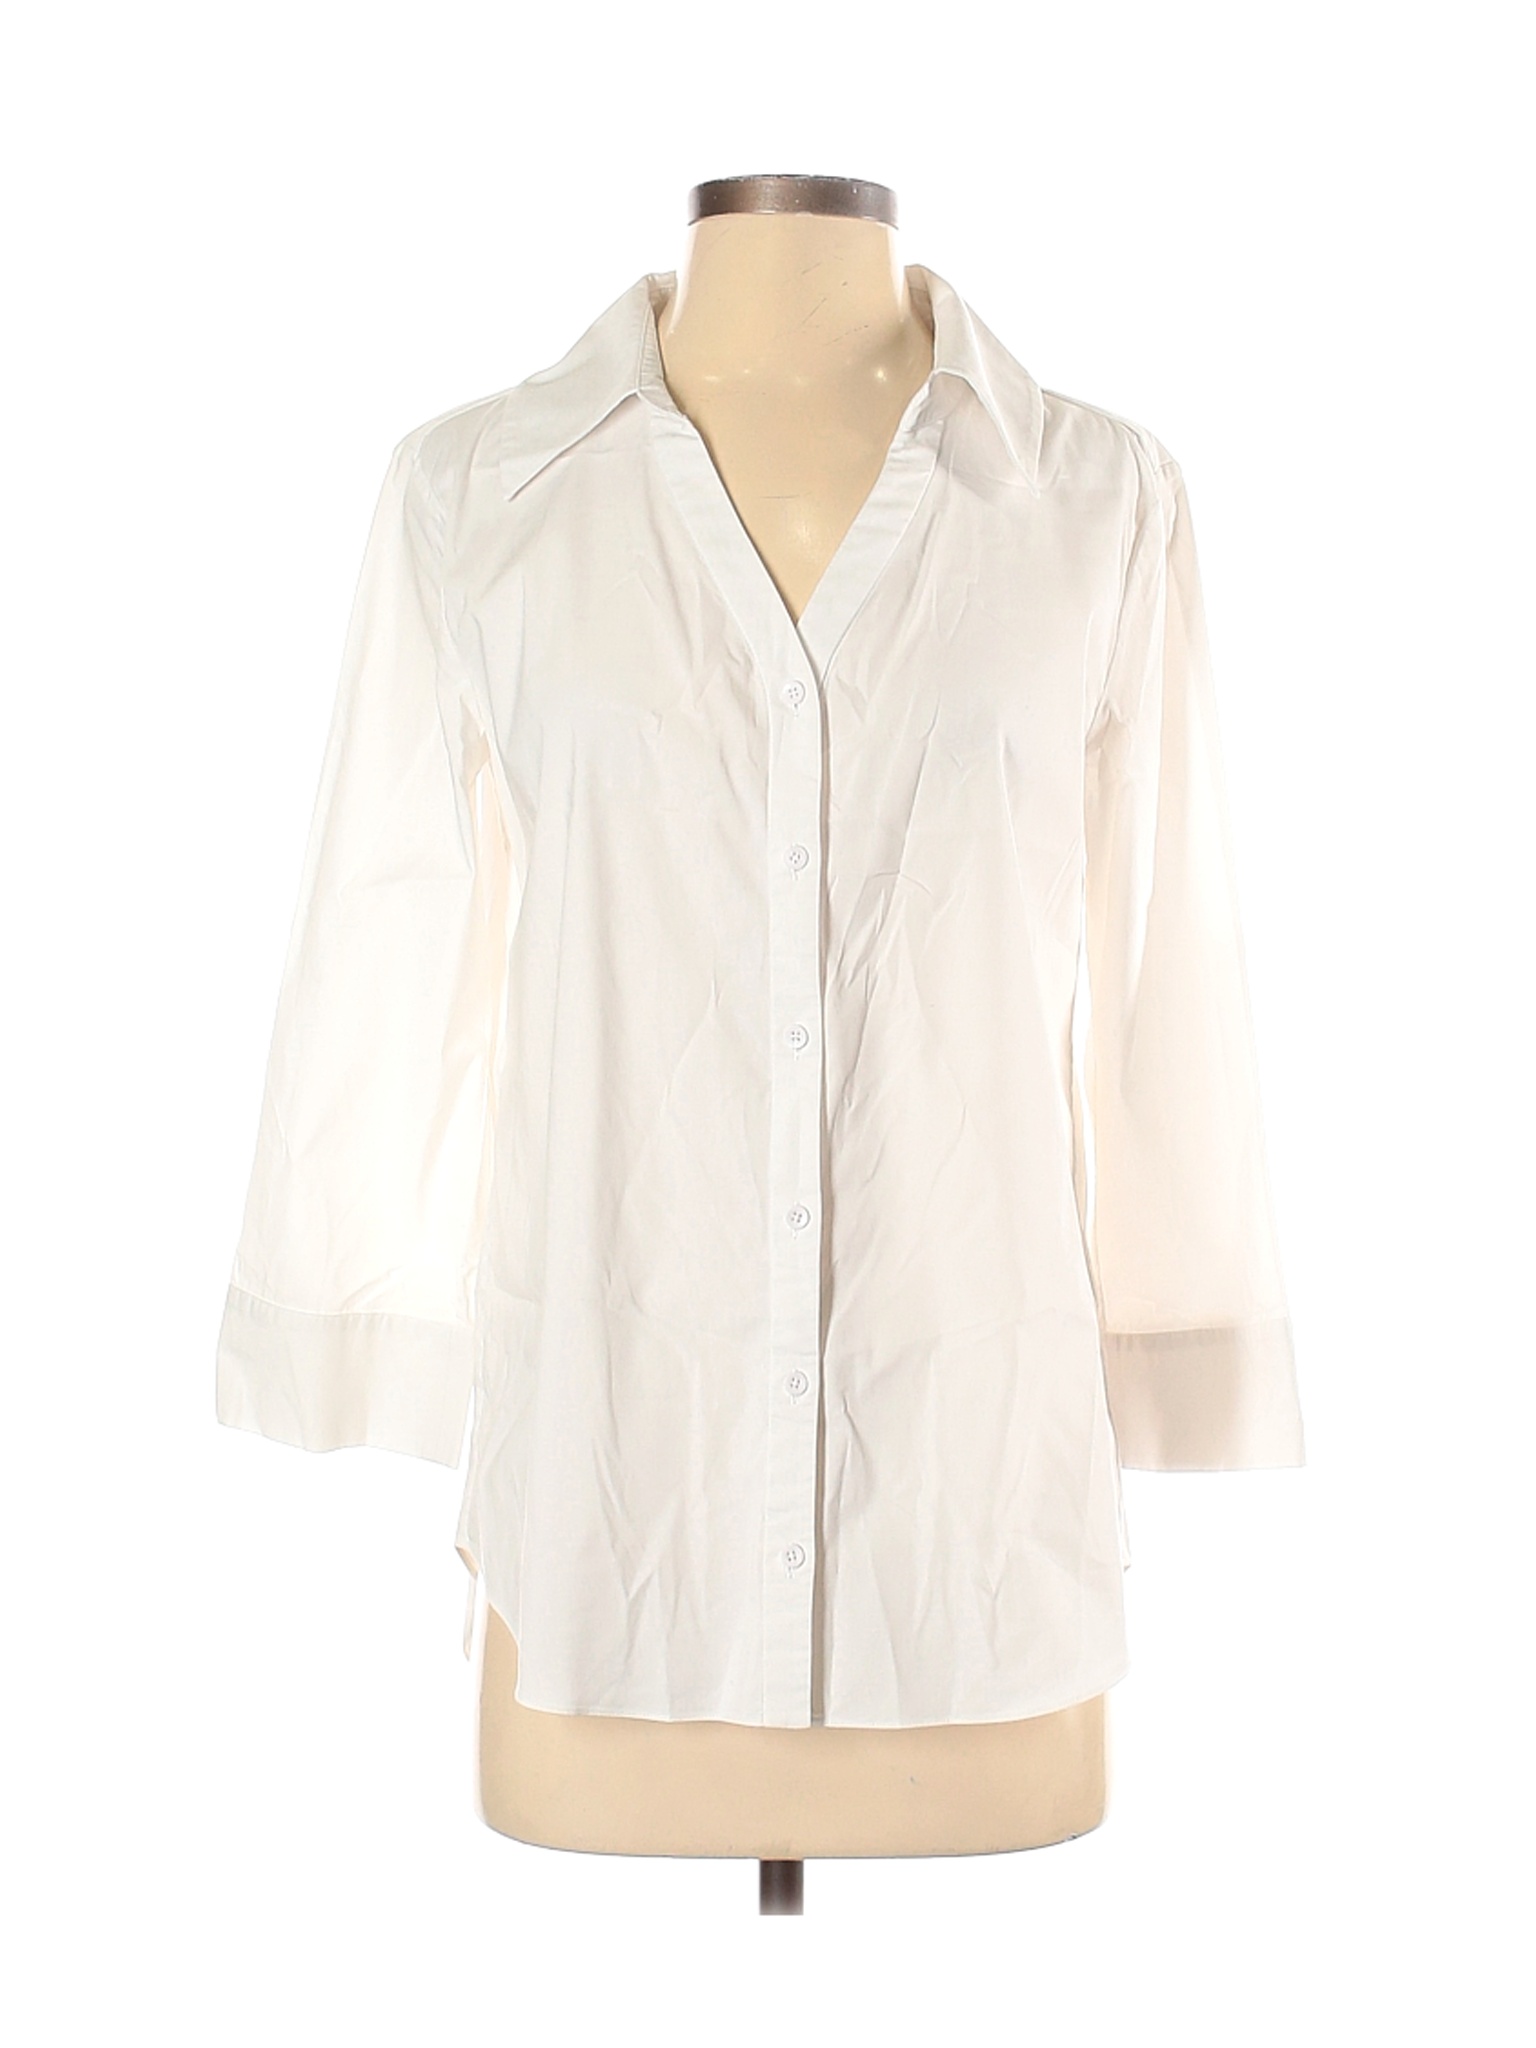 Alice + Olivia Women Ivory 3/4 Sleeve Button-Down Shirt S | eBay